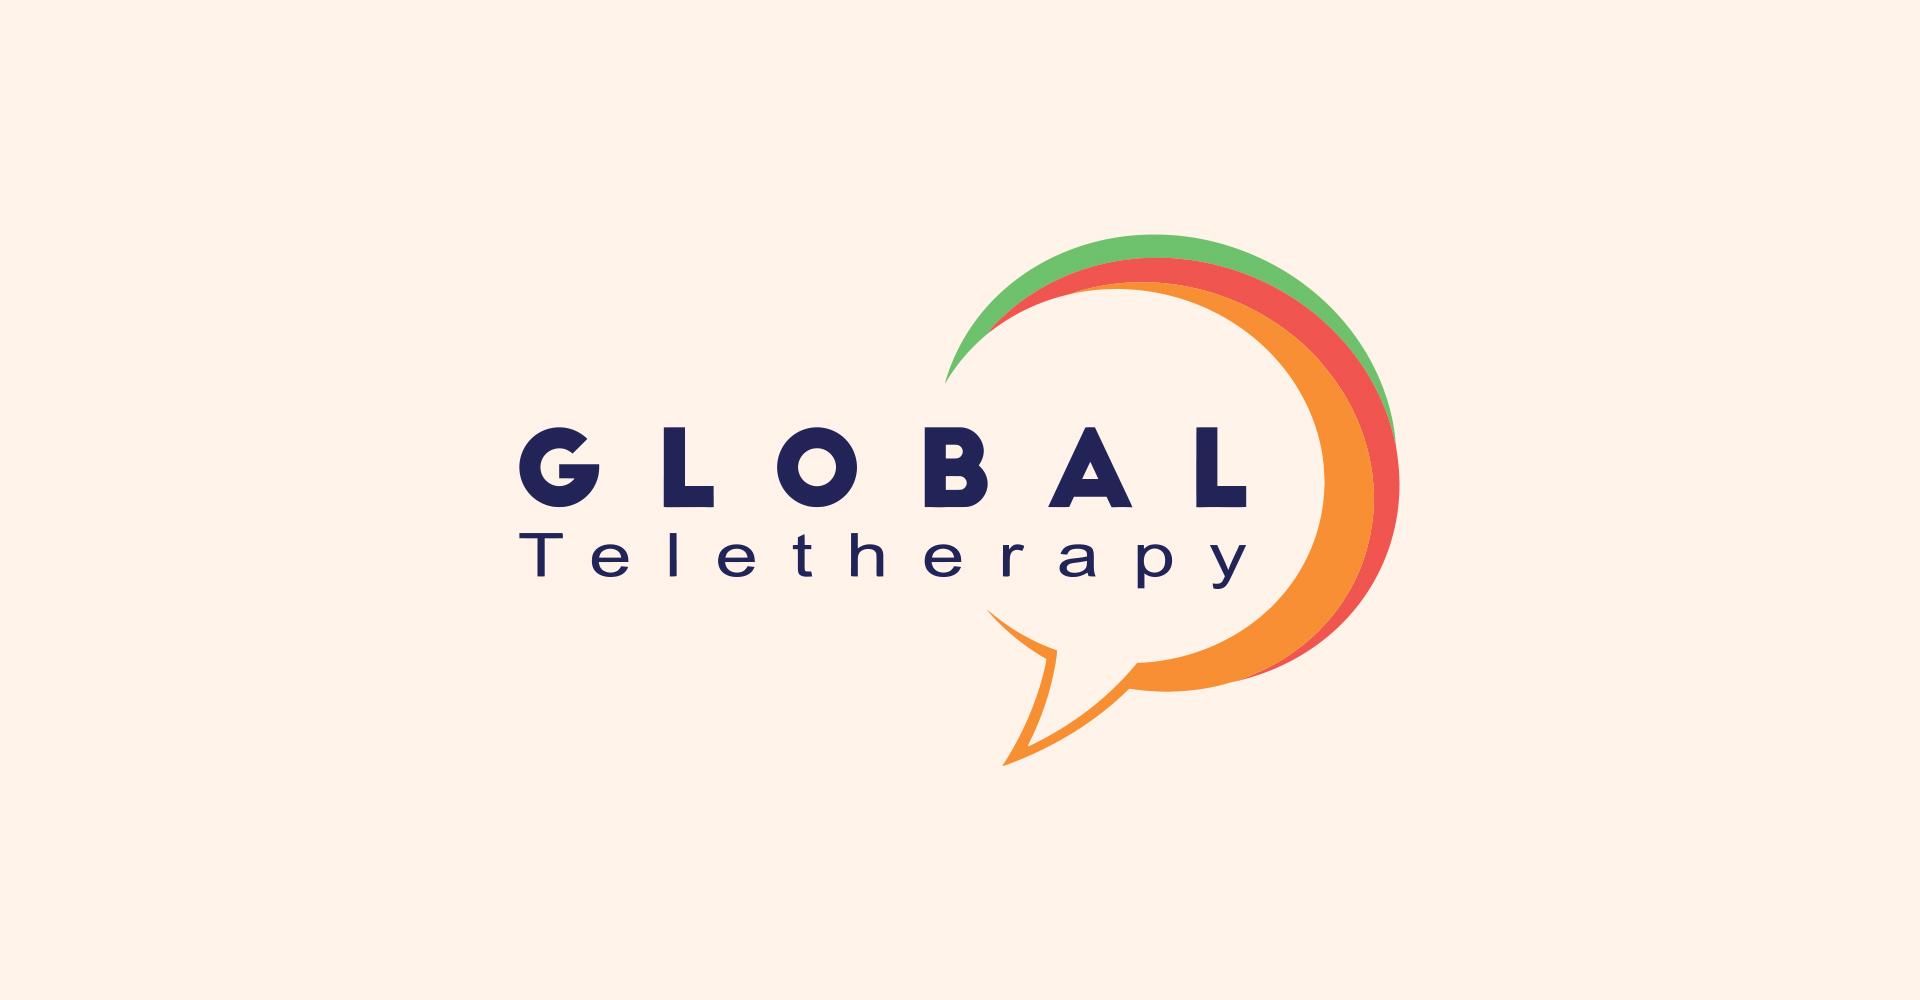 Global teletherapy logo